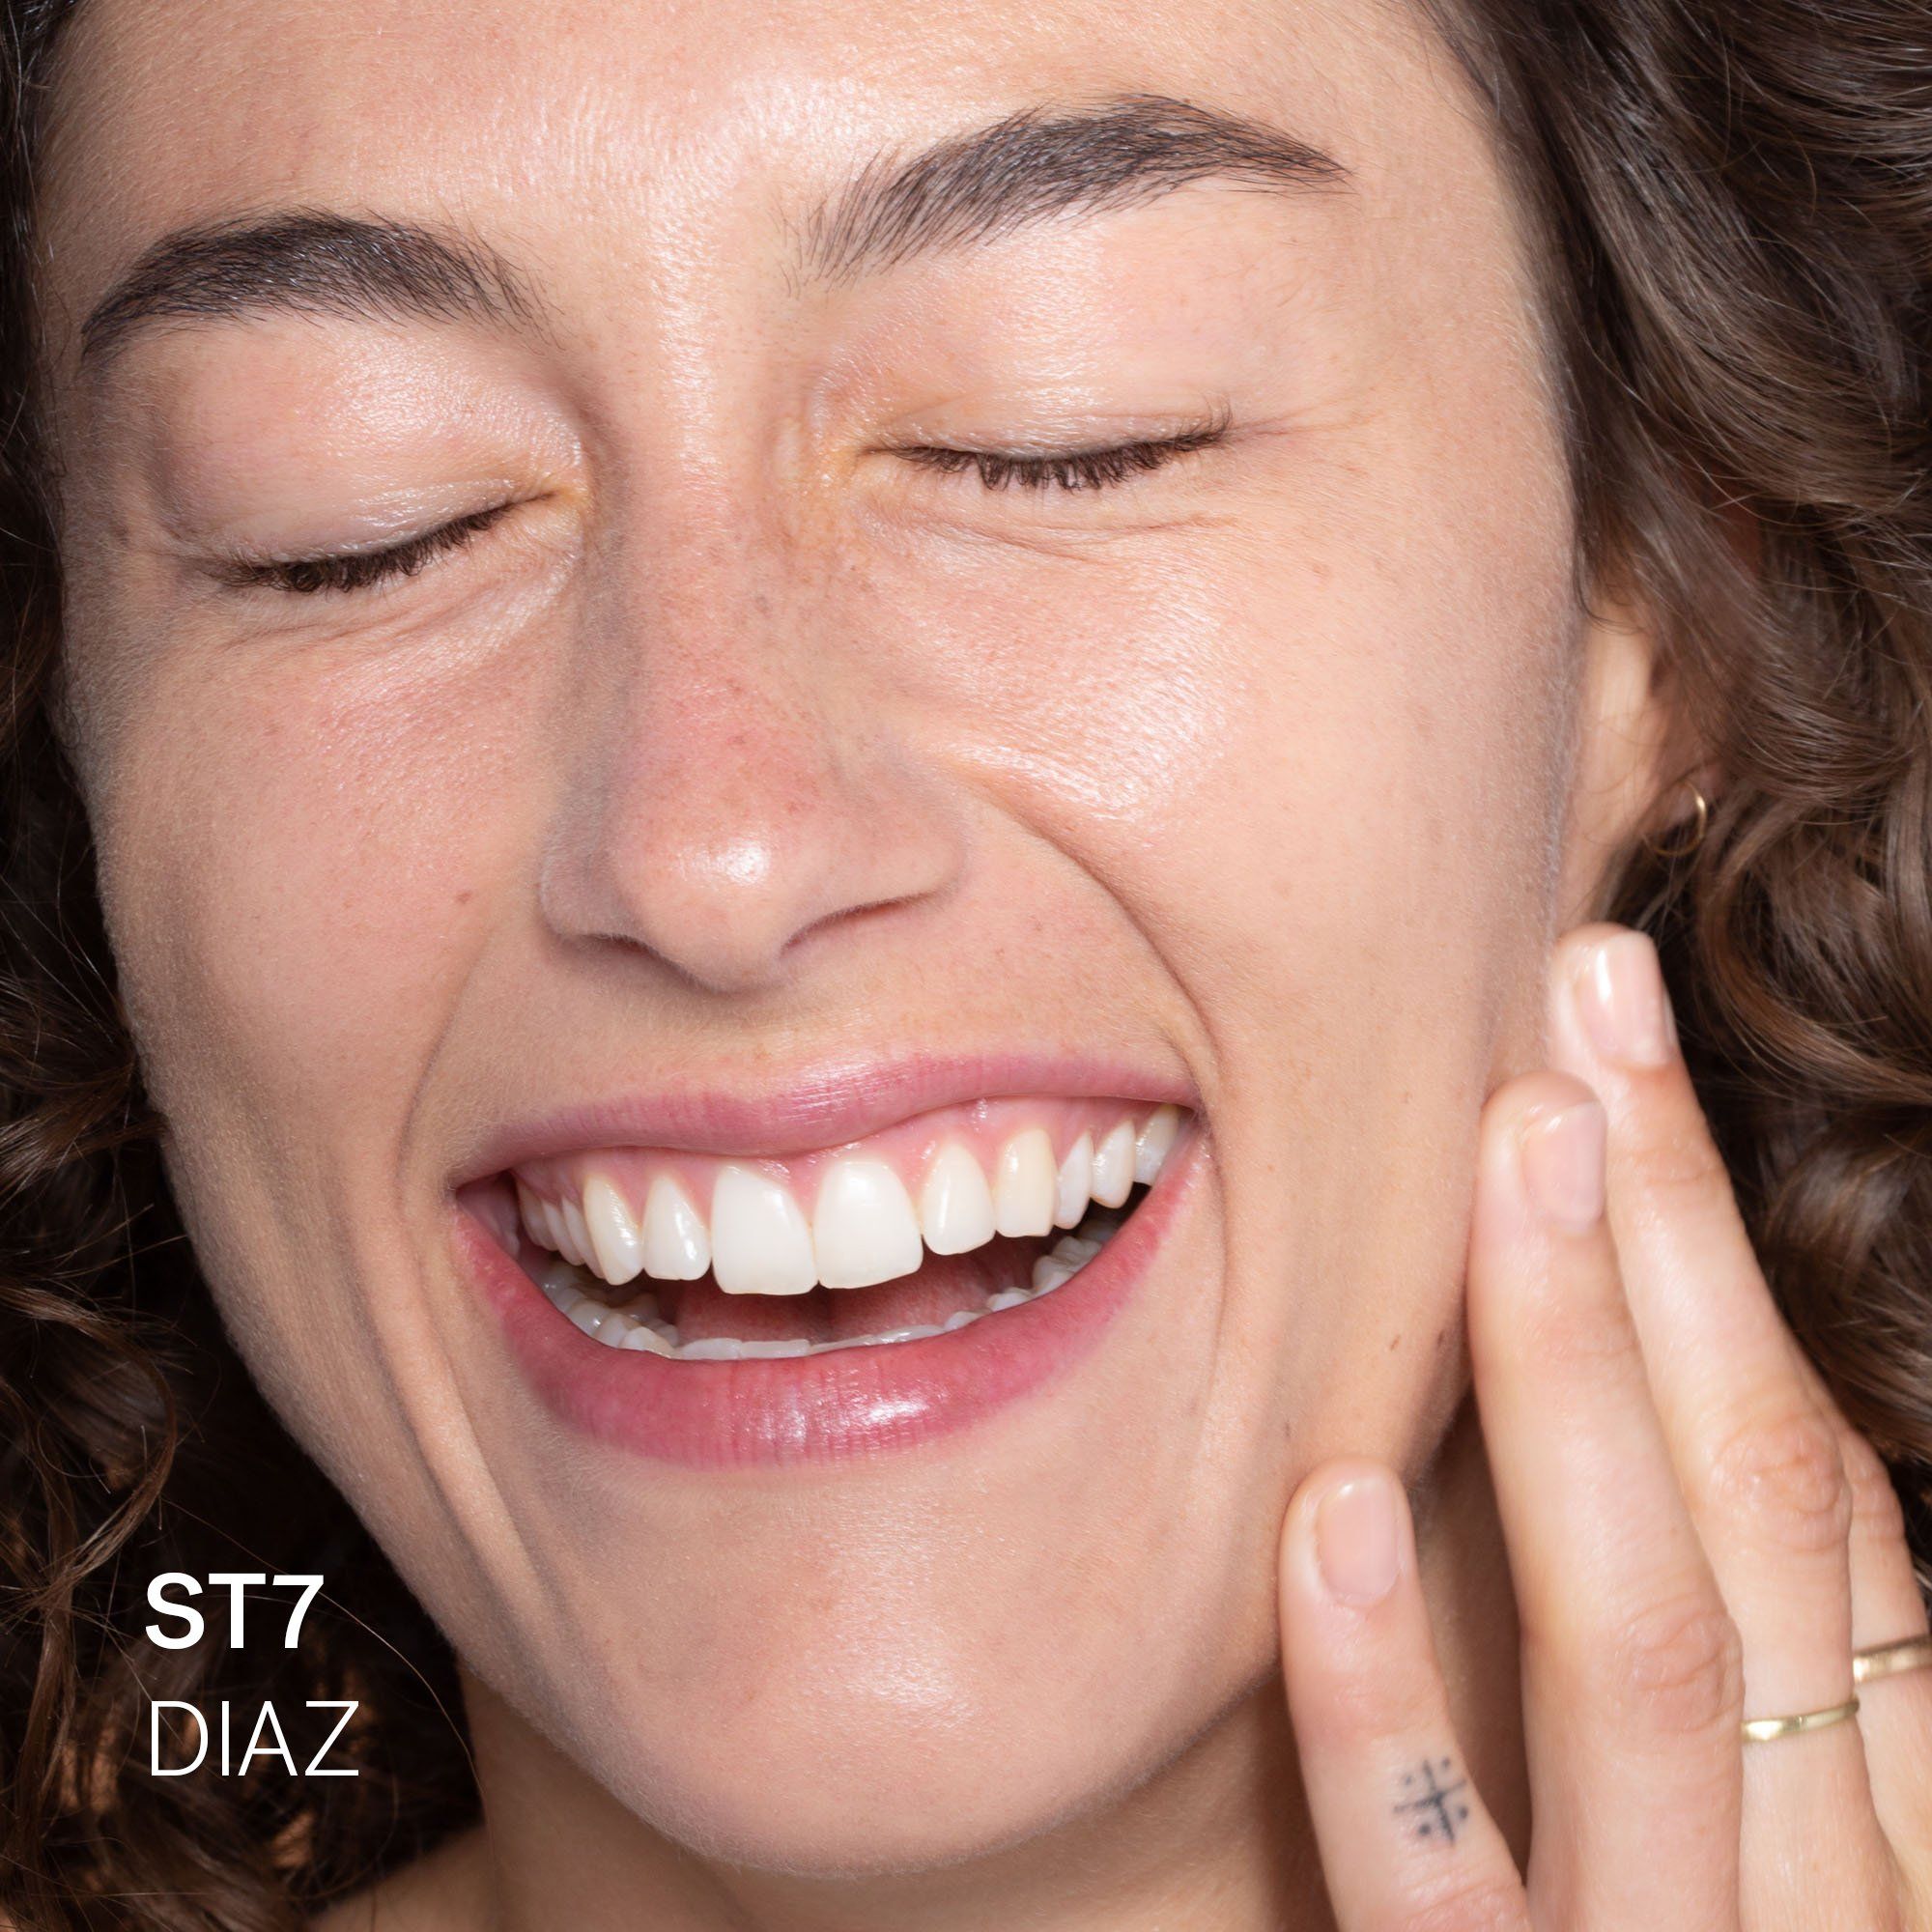 ST7 Diaz (for light-medium skin with neutral undertones)